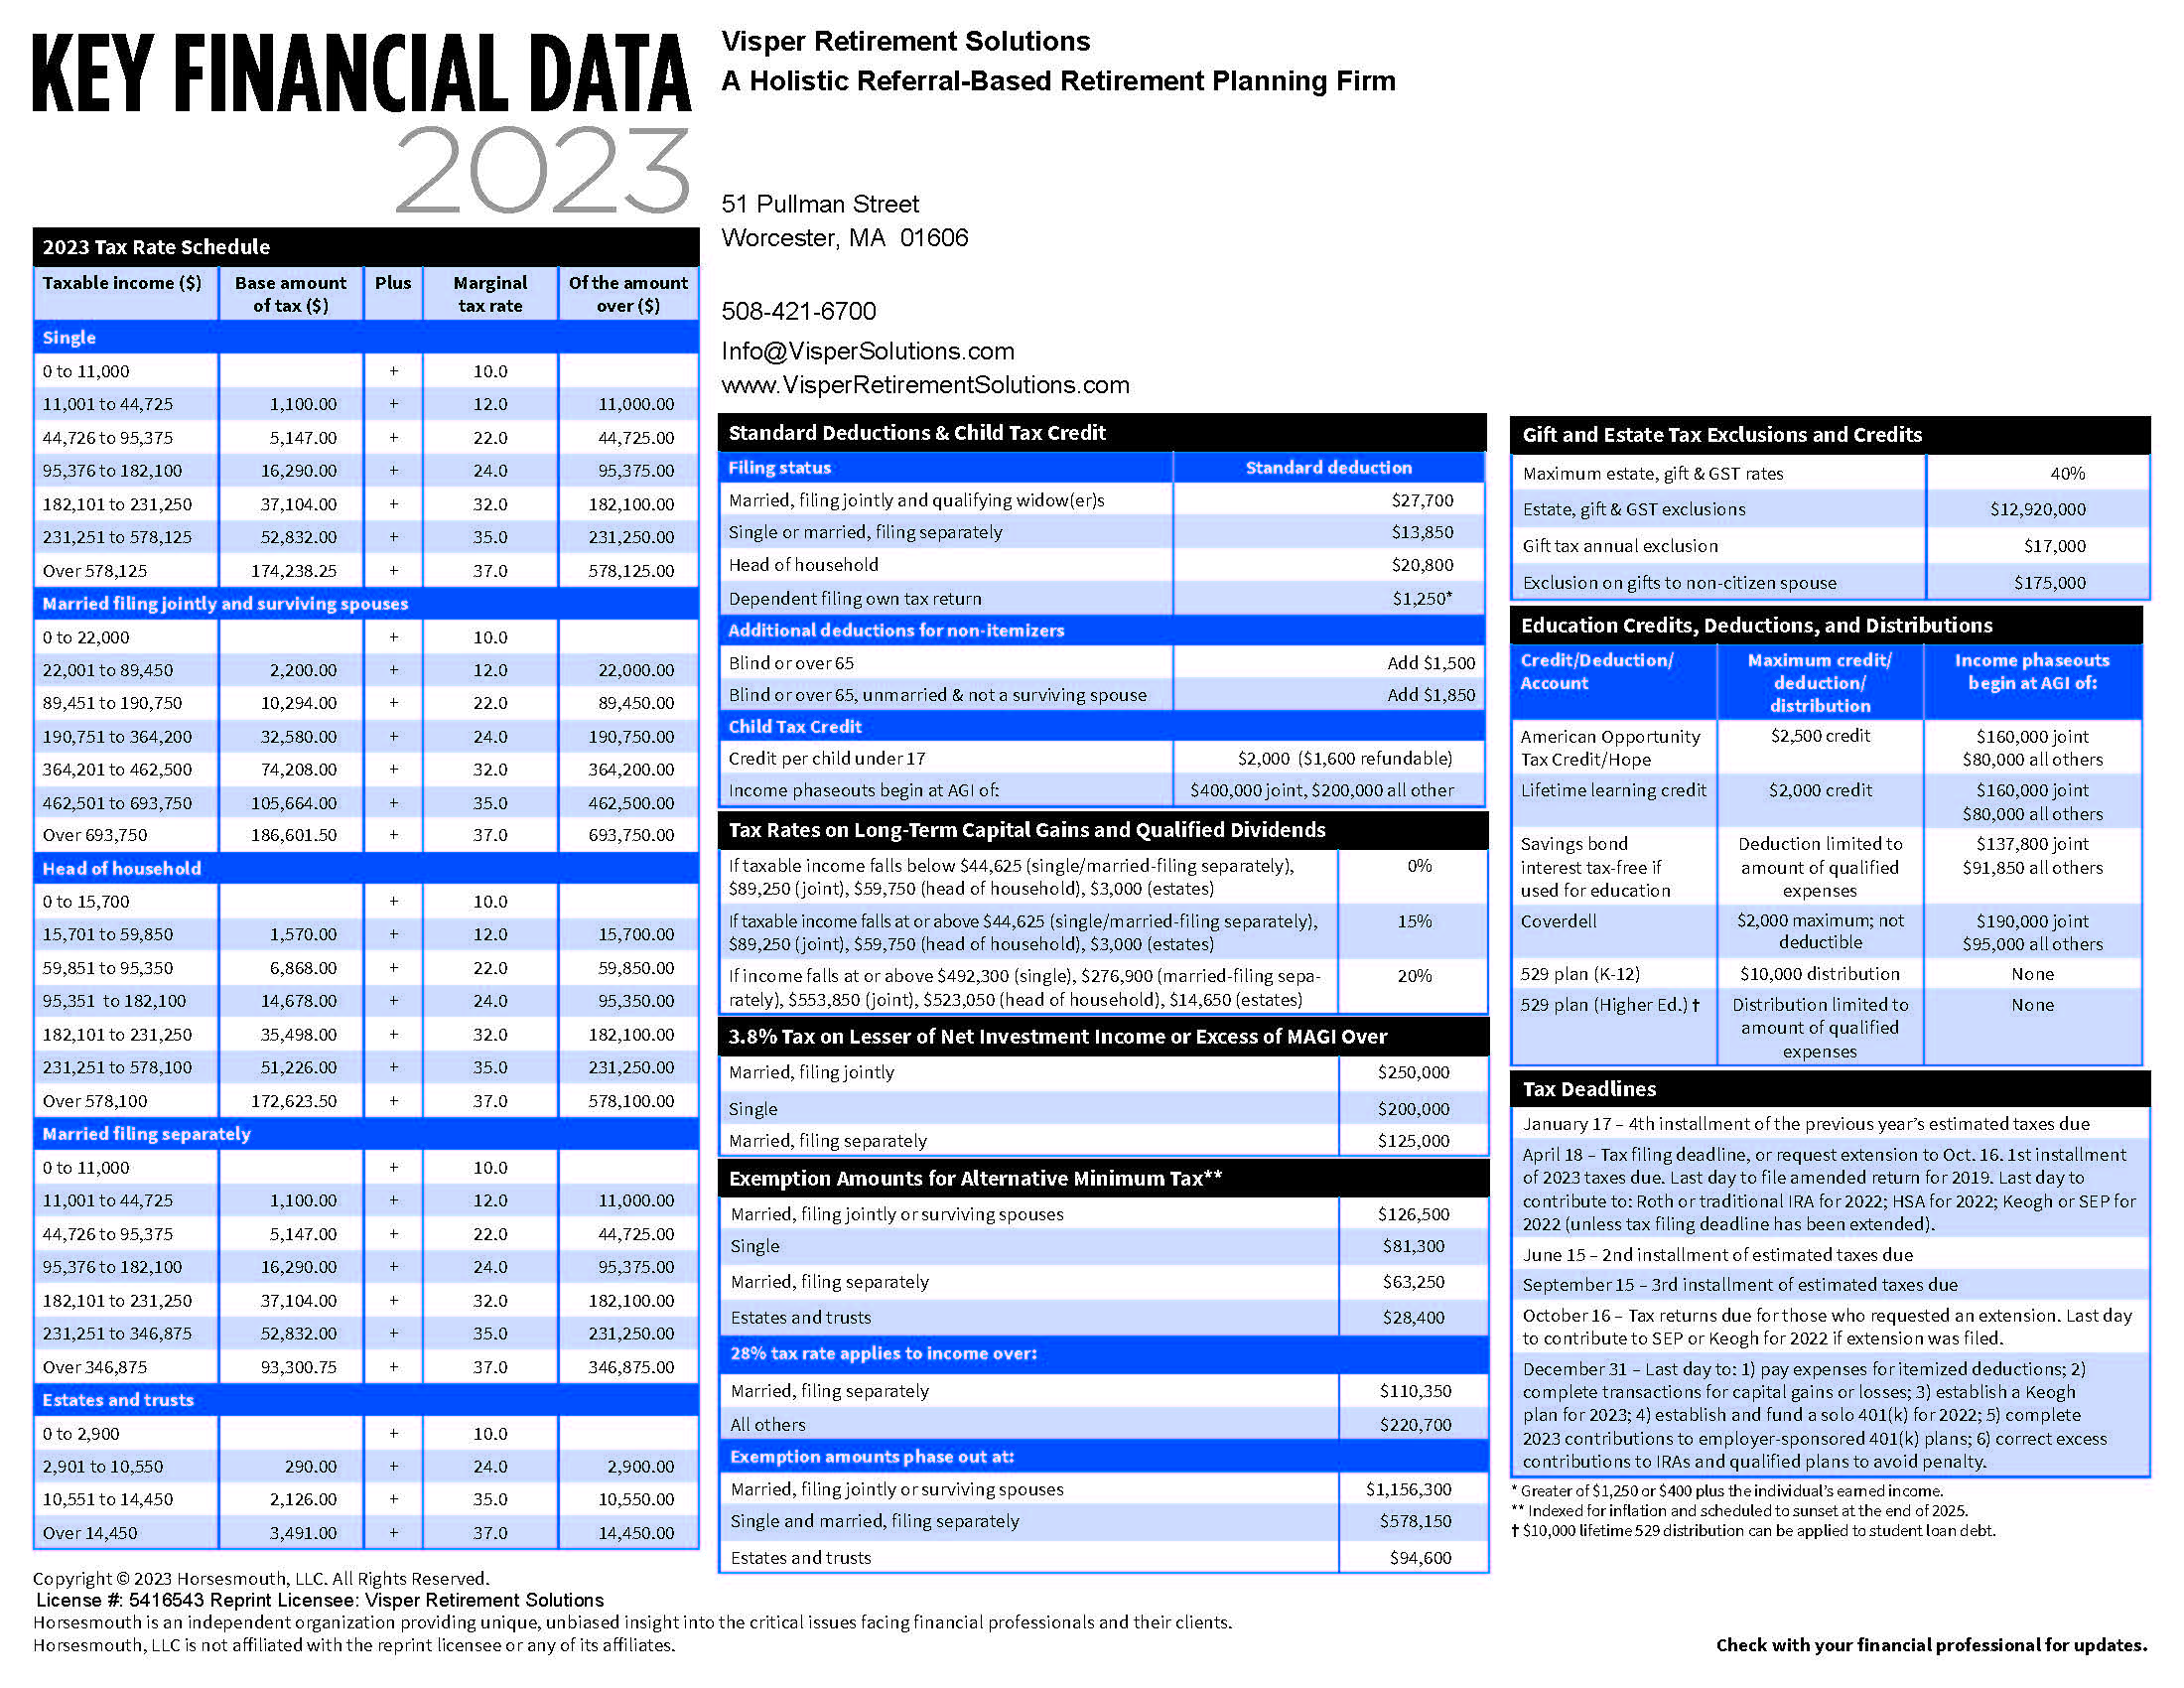 Key Financial Data Sheet 2023_Page_1